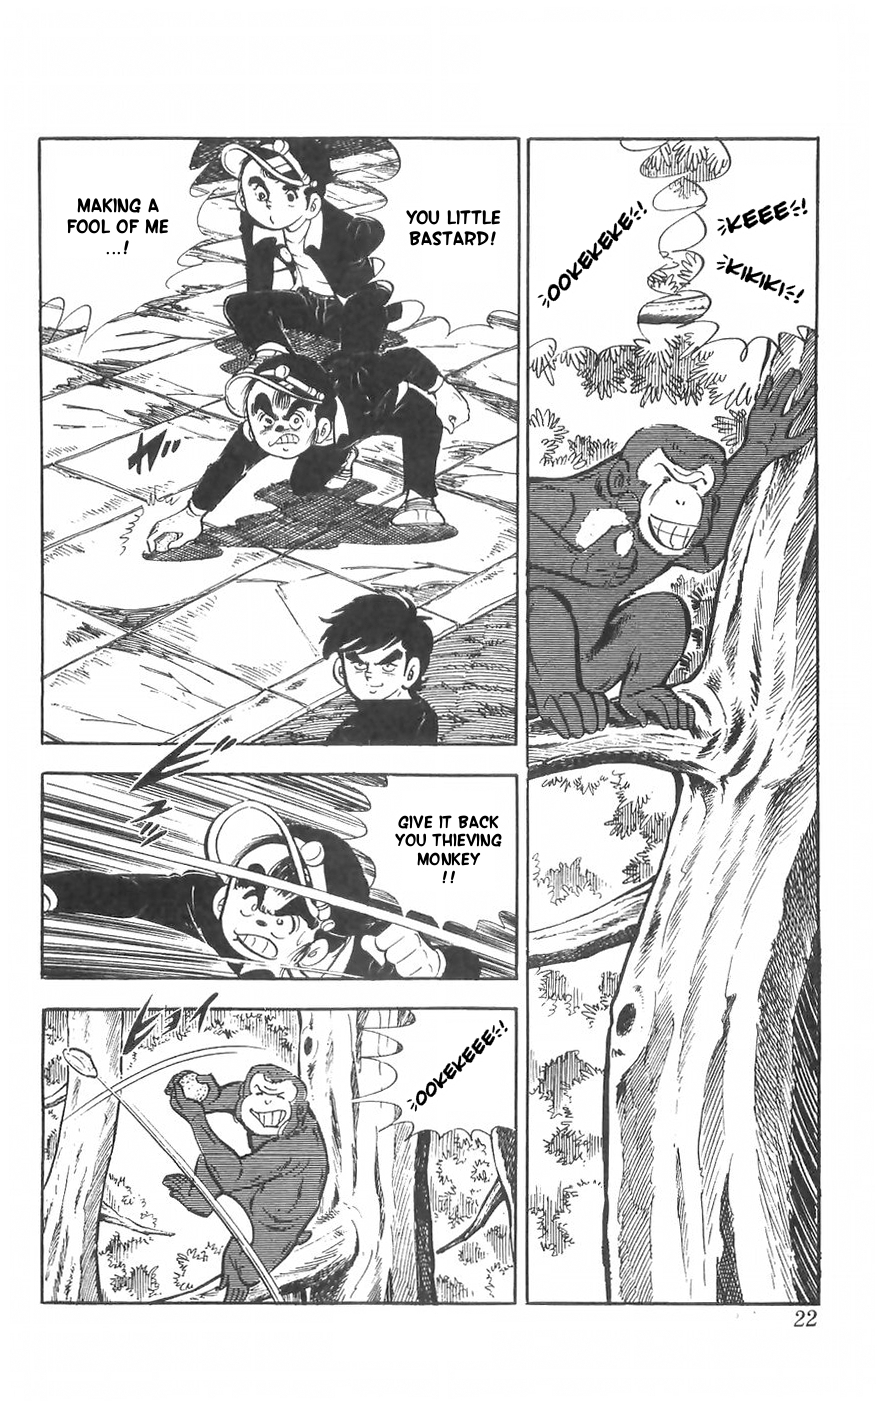 Shiroi Senshi Yamato Vol. 8 Ch. 30 The Raging Waves of Tosa